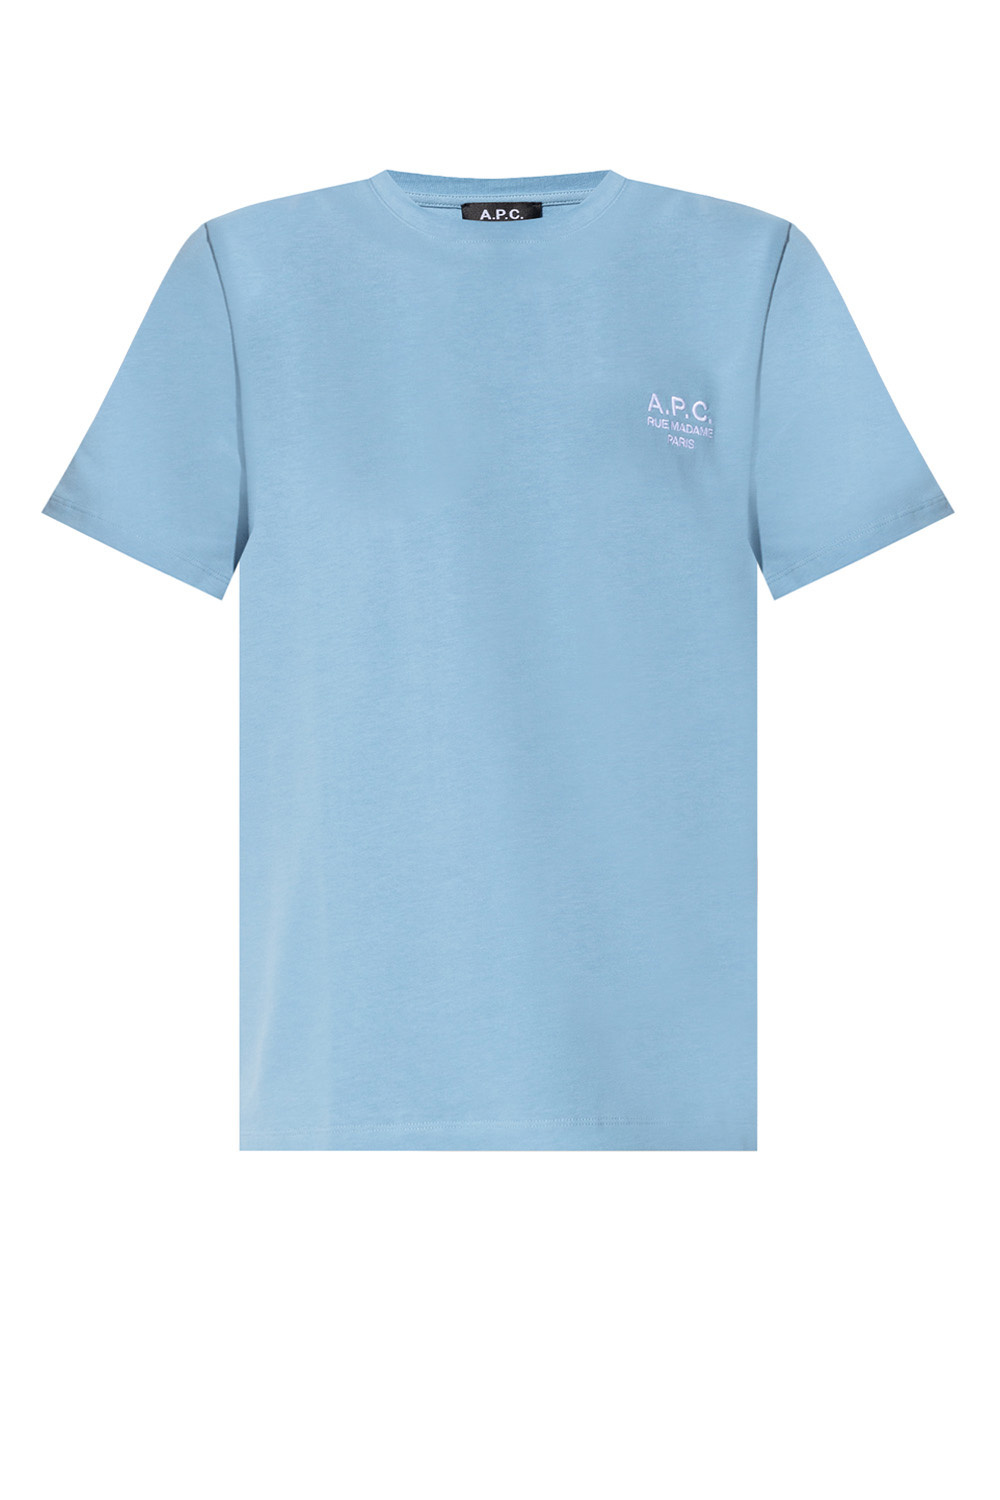 embroidered T shirt - halsen Brother i - - Svart Stoke Blue sweatshirt IetpShops Blood med - A.P.C. GB Logo dragkedja